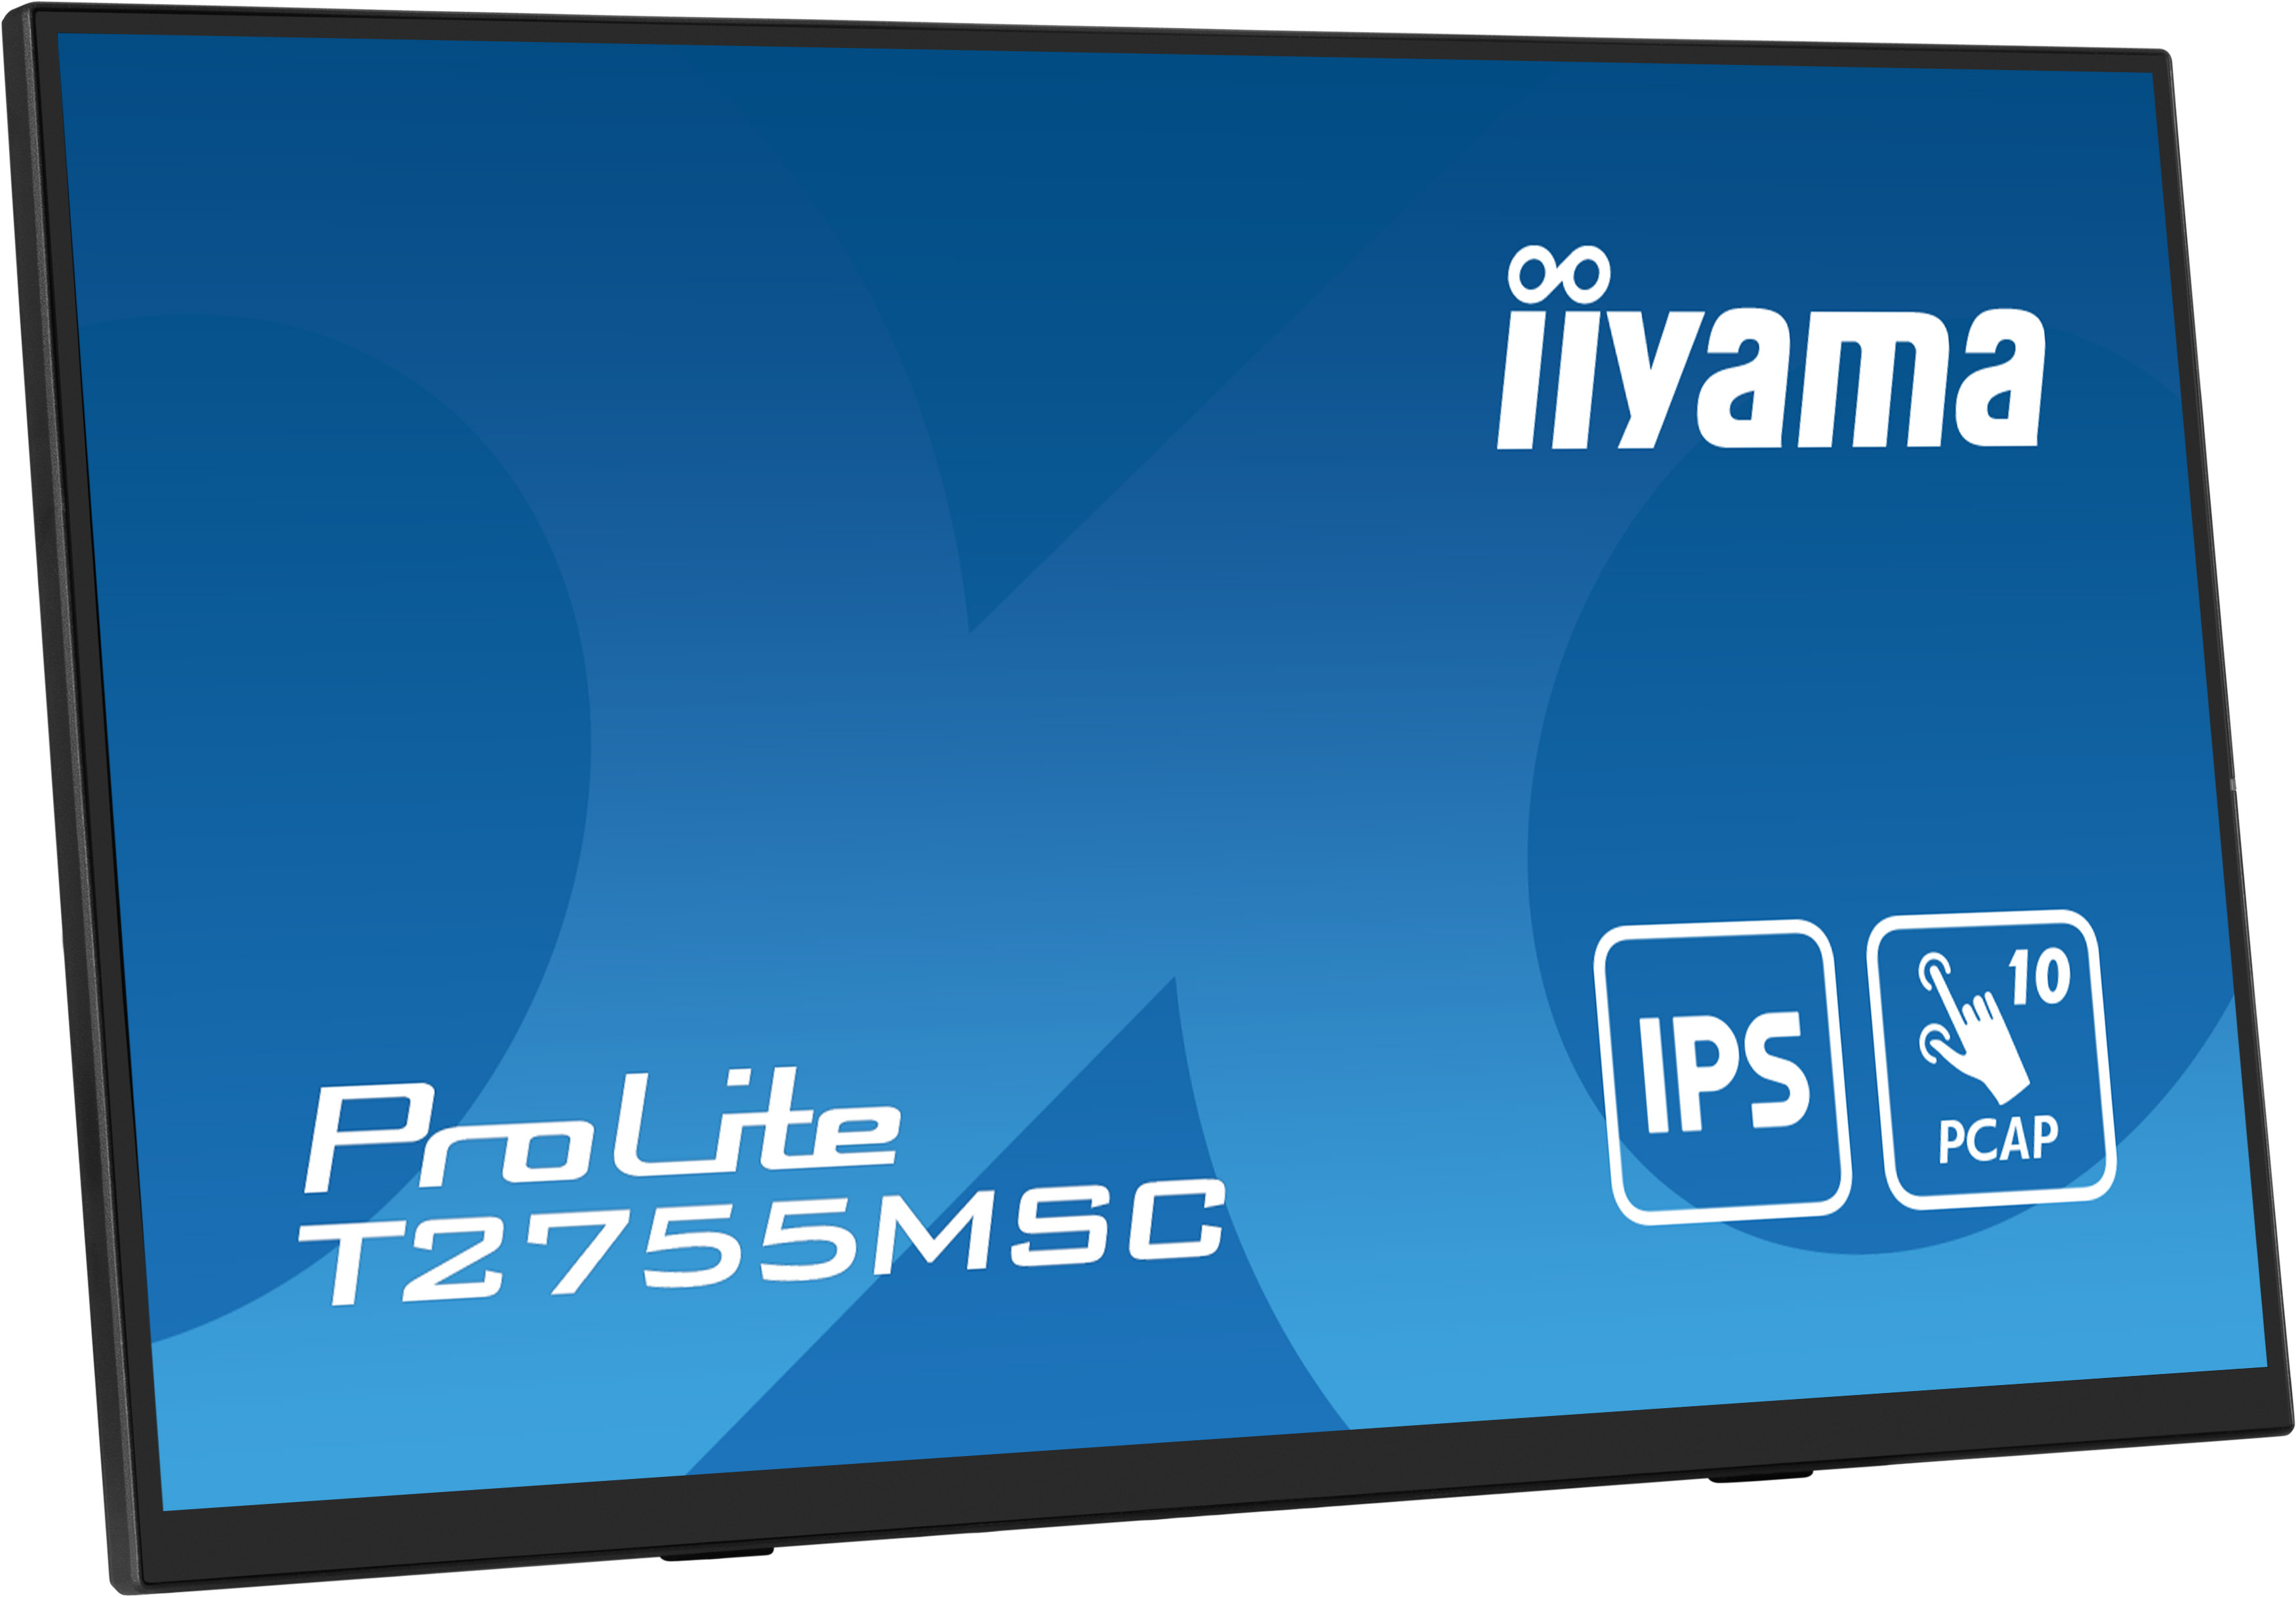 27" iiyama T2755MSC-B1:IPS, FHD, PCAP, Webcam 